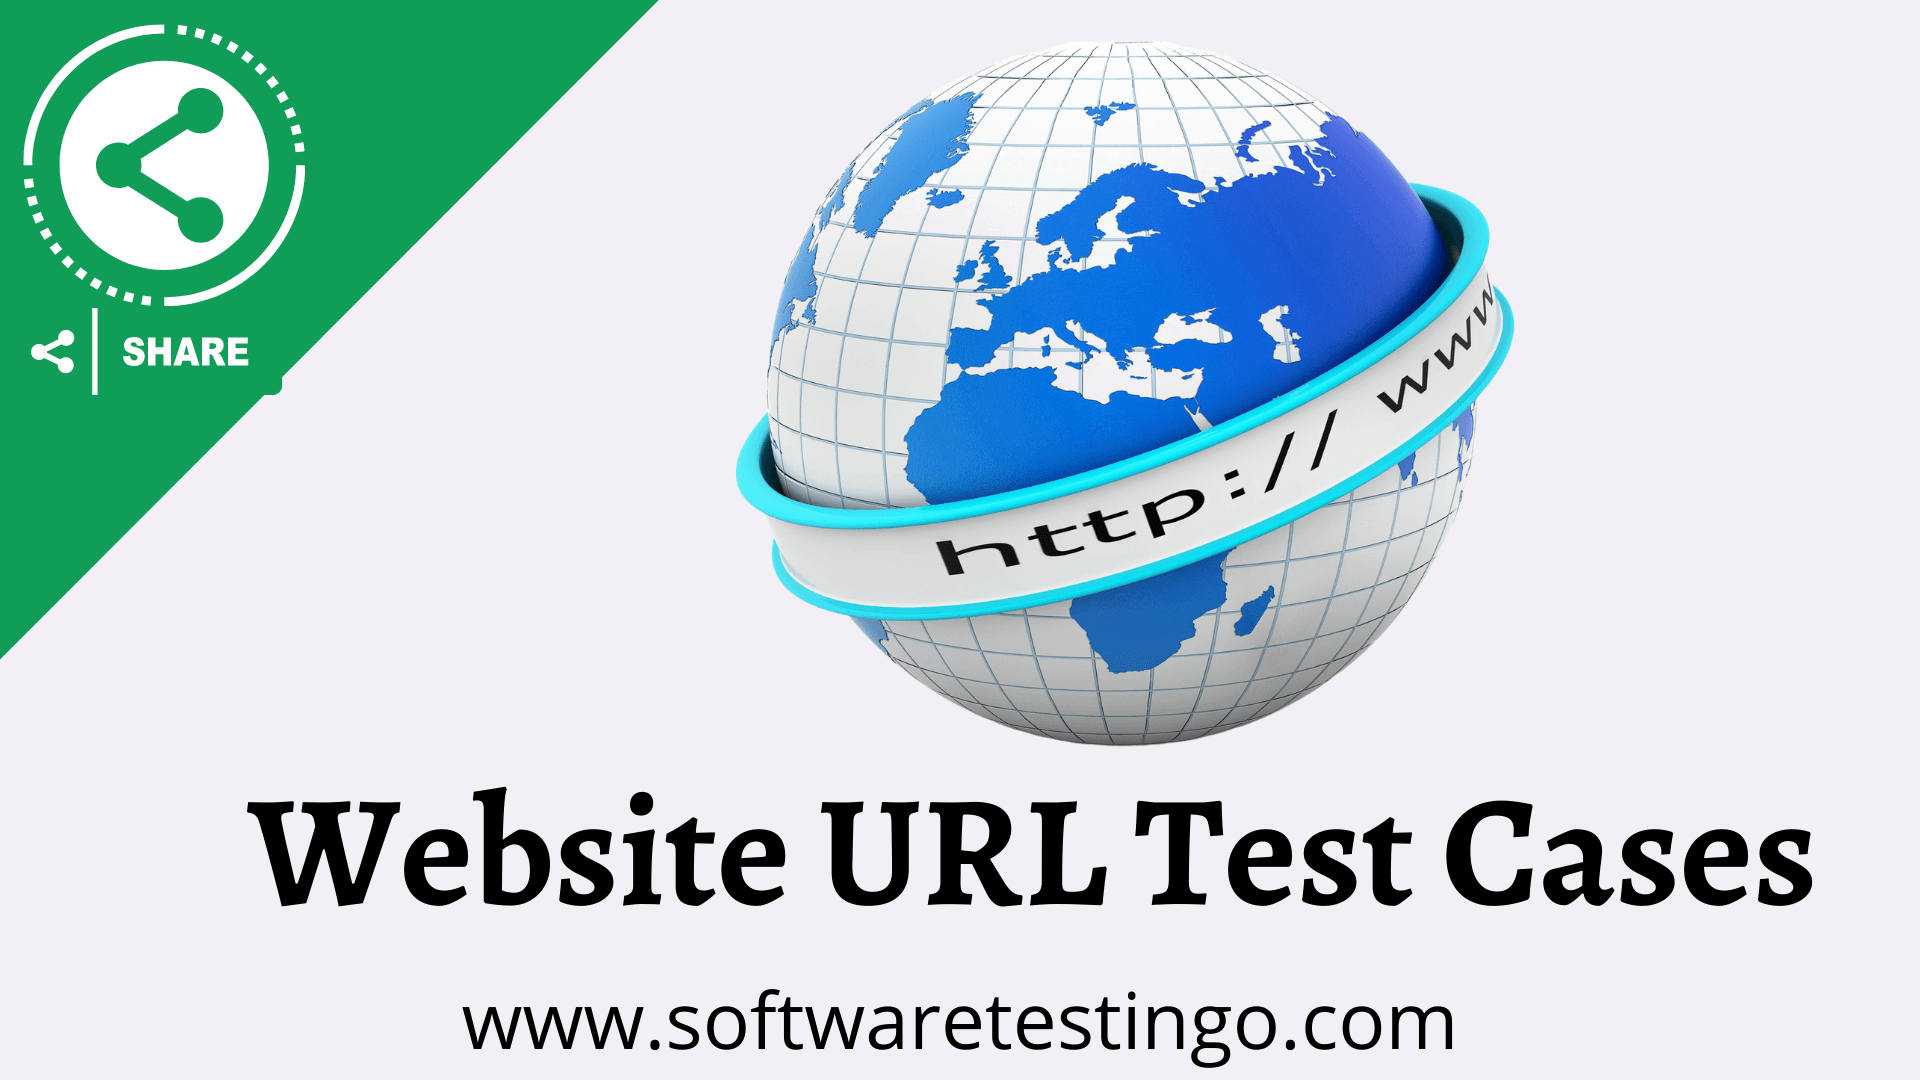 Test Cases For Website URL